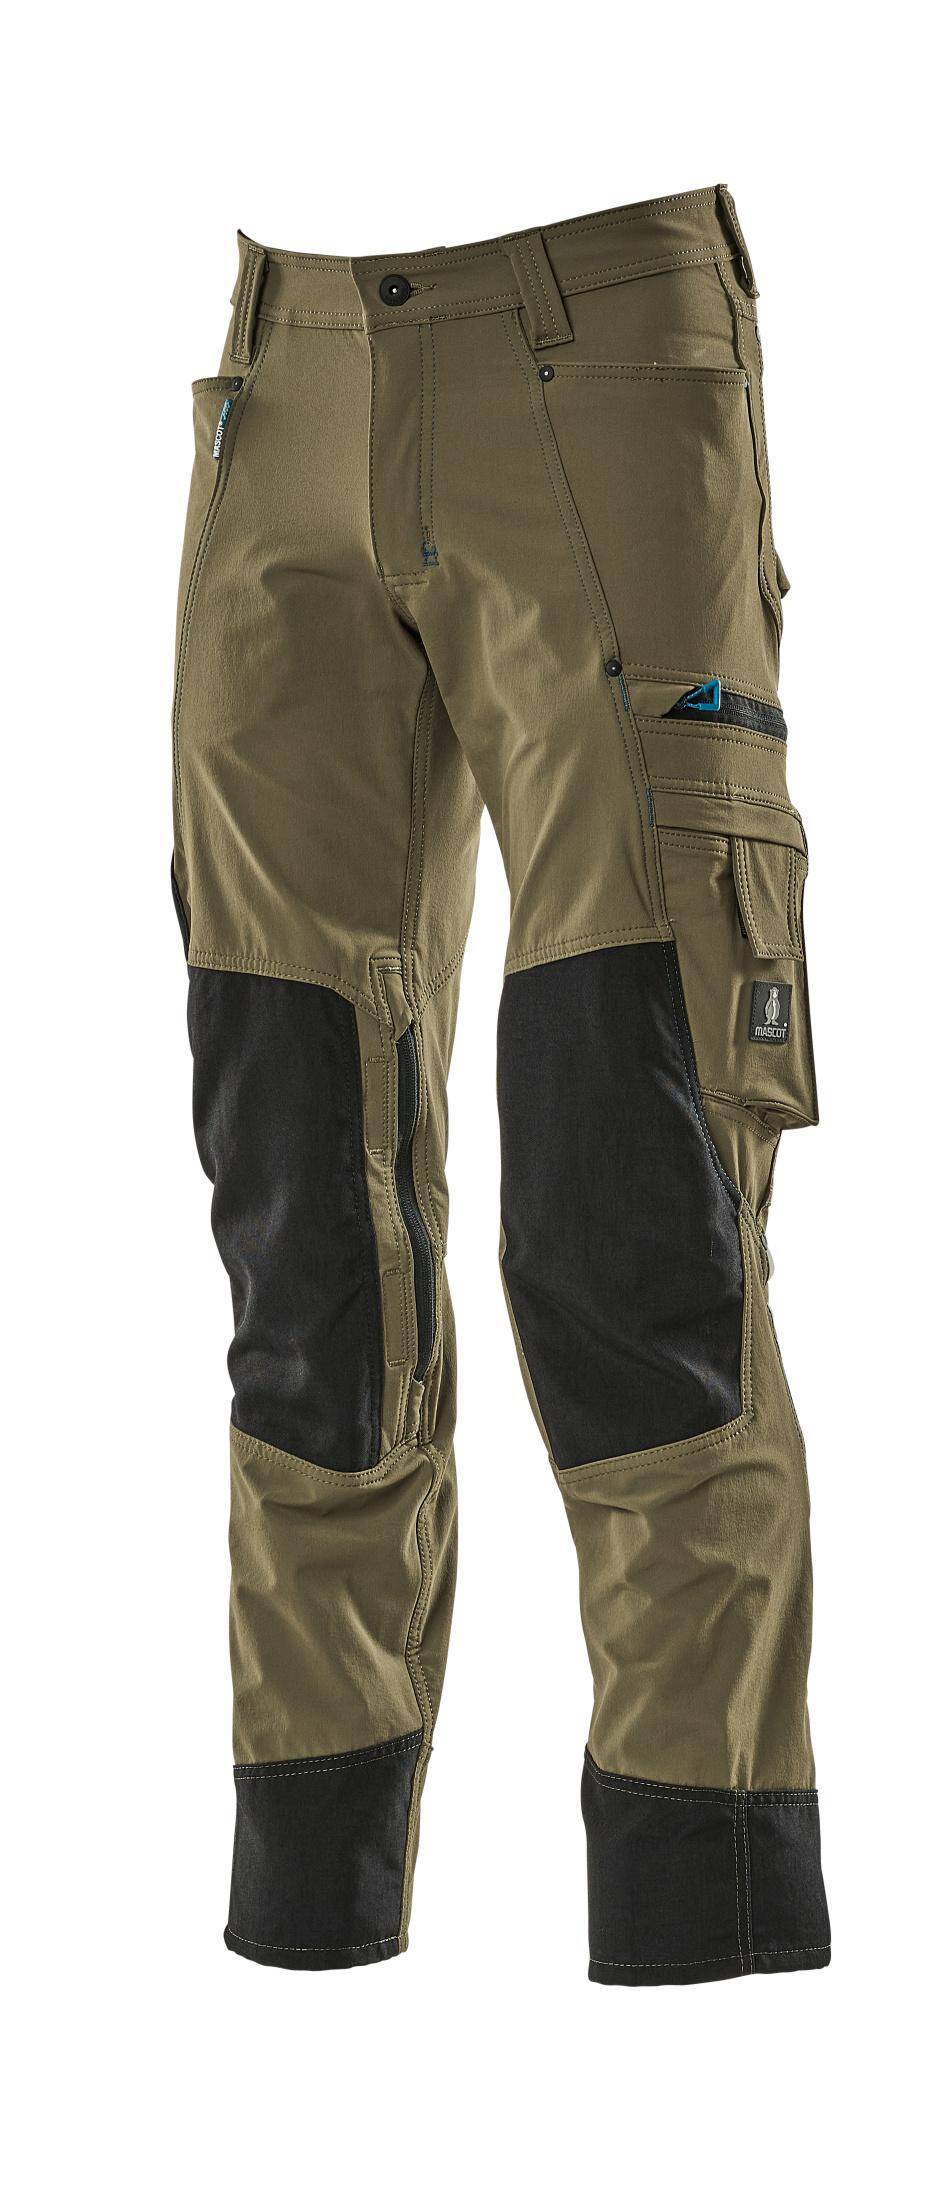 Trousers with kneepad pockets Advanced khaki (Photo 1)